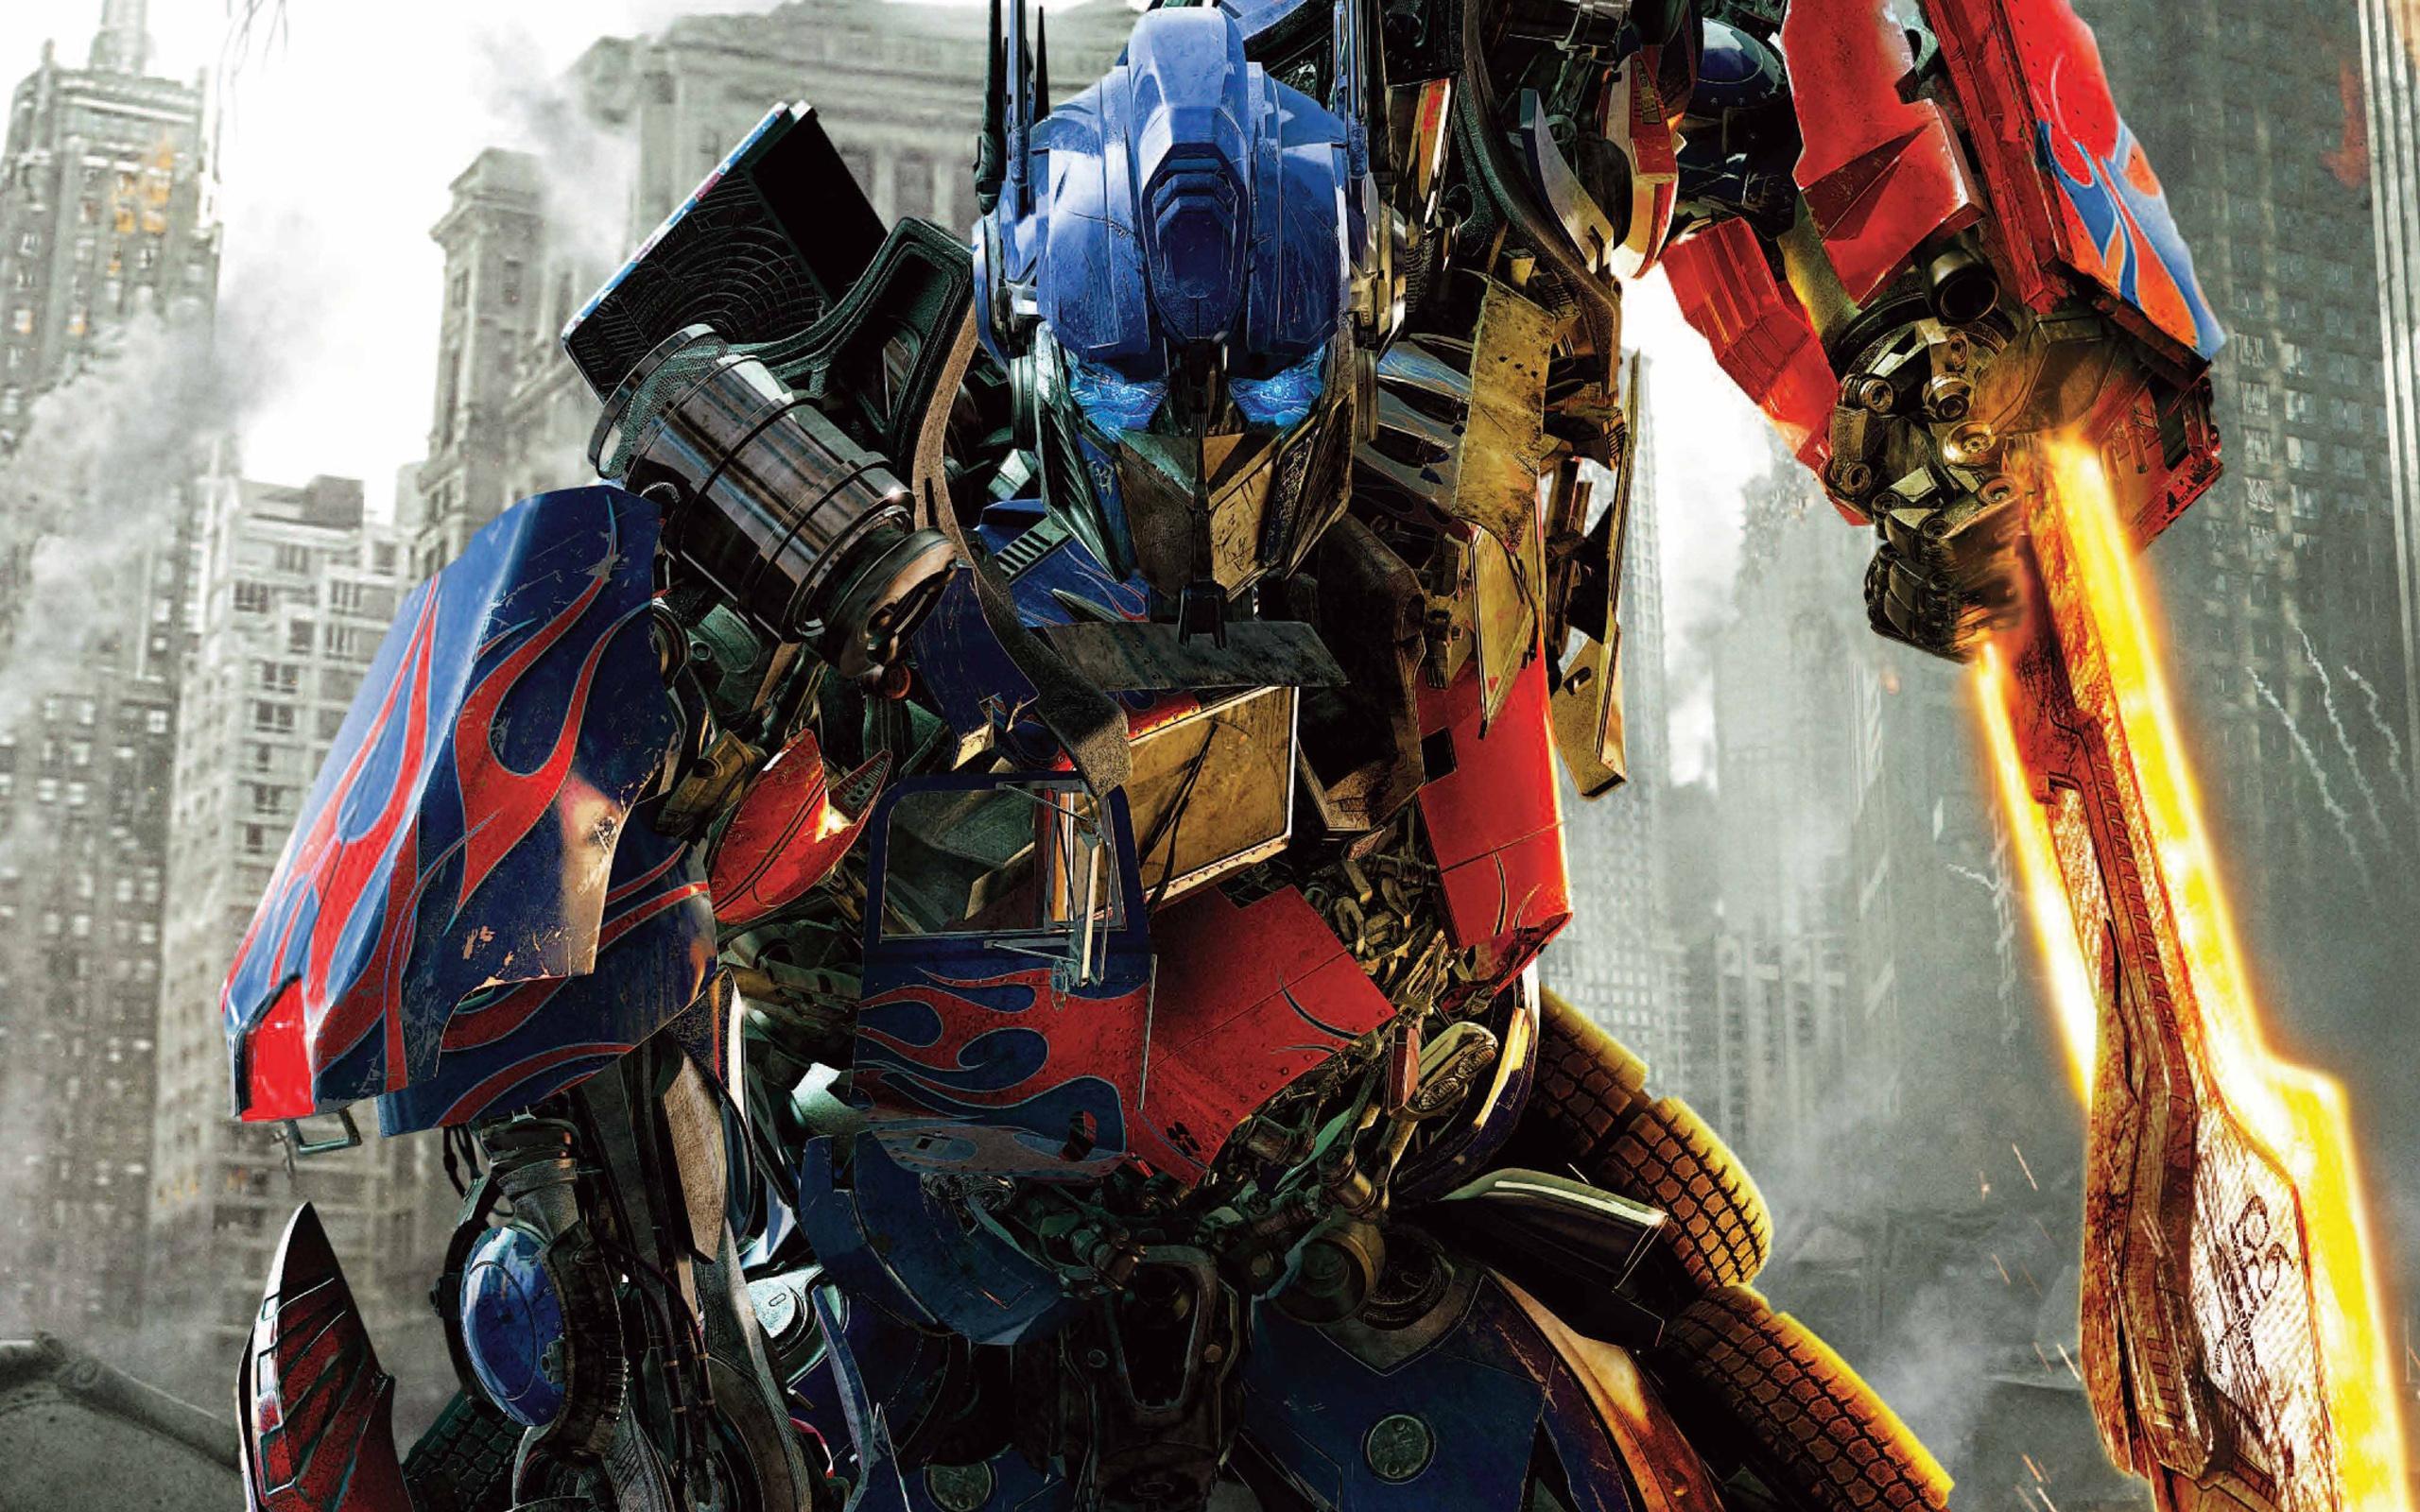 Optimus Prime Truck Transformers 4 HD Wallpaper, Backgrounds Image.